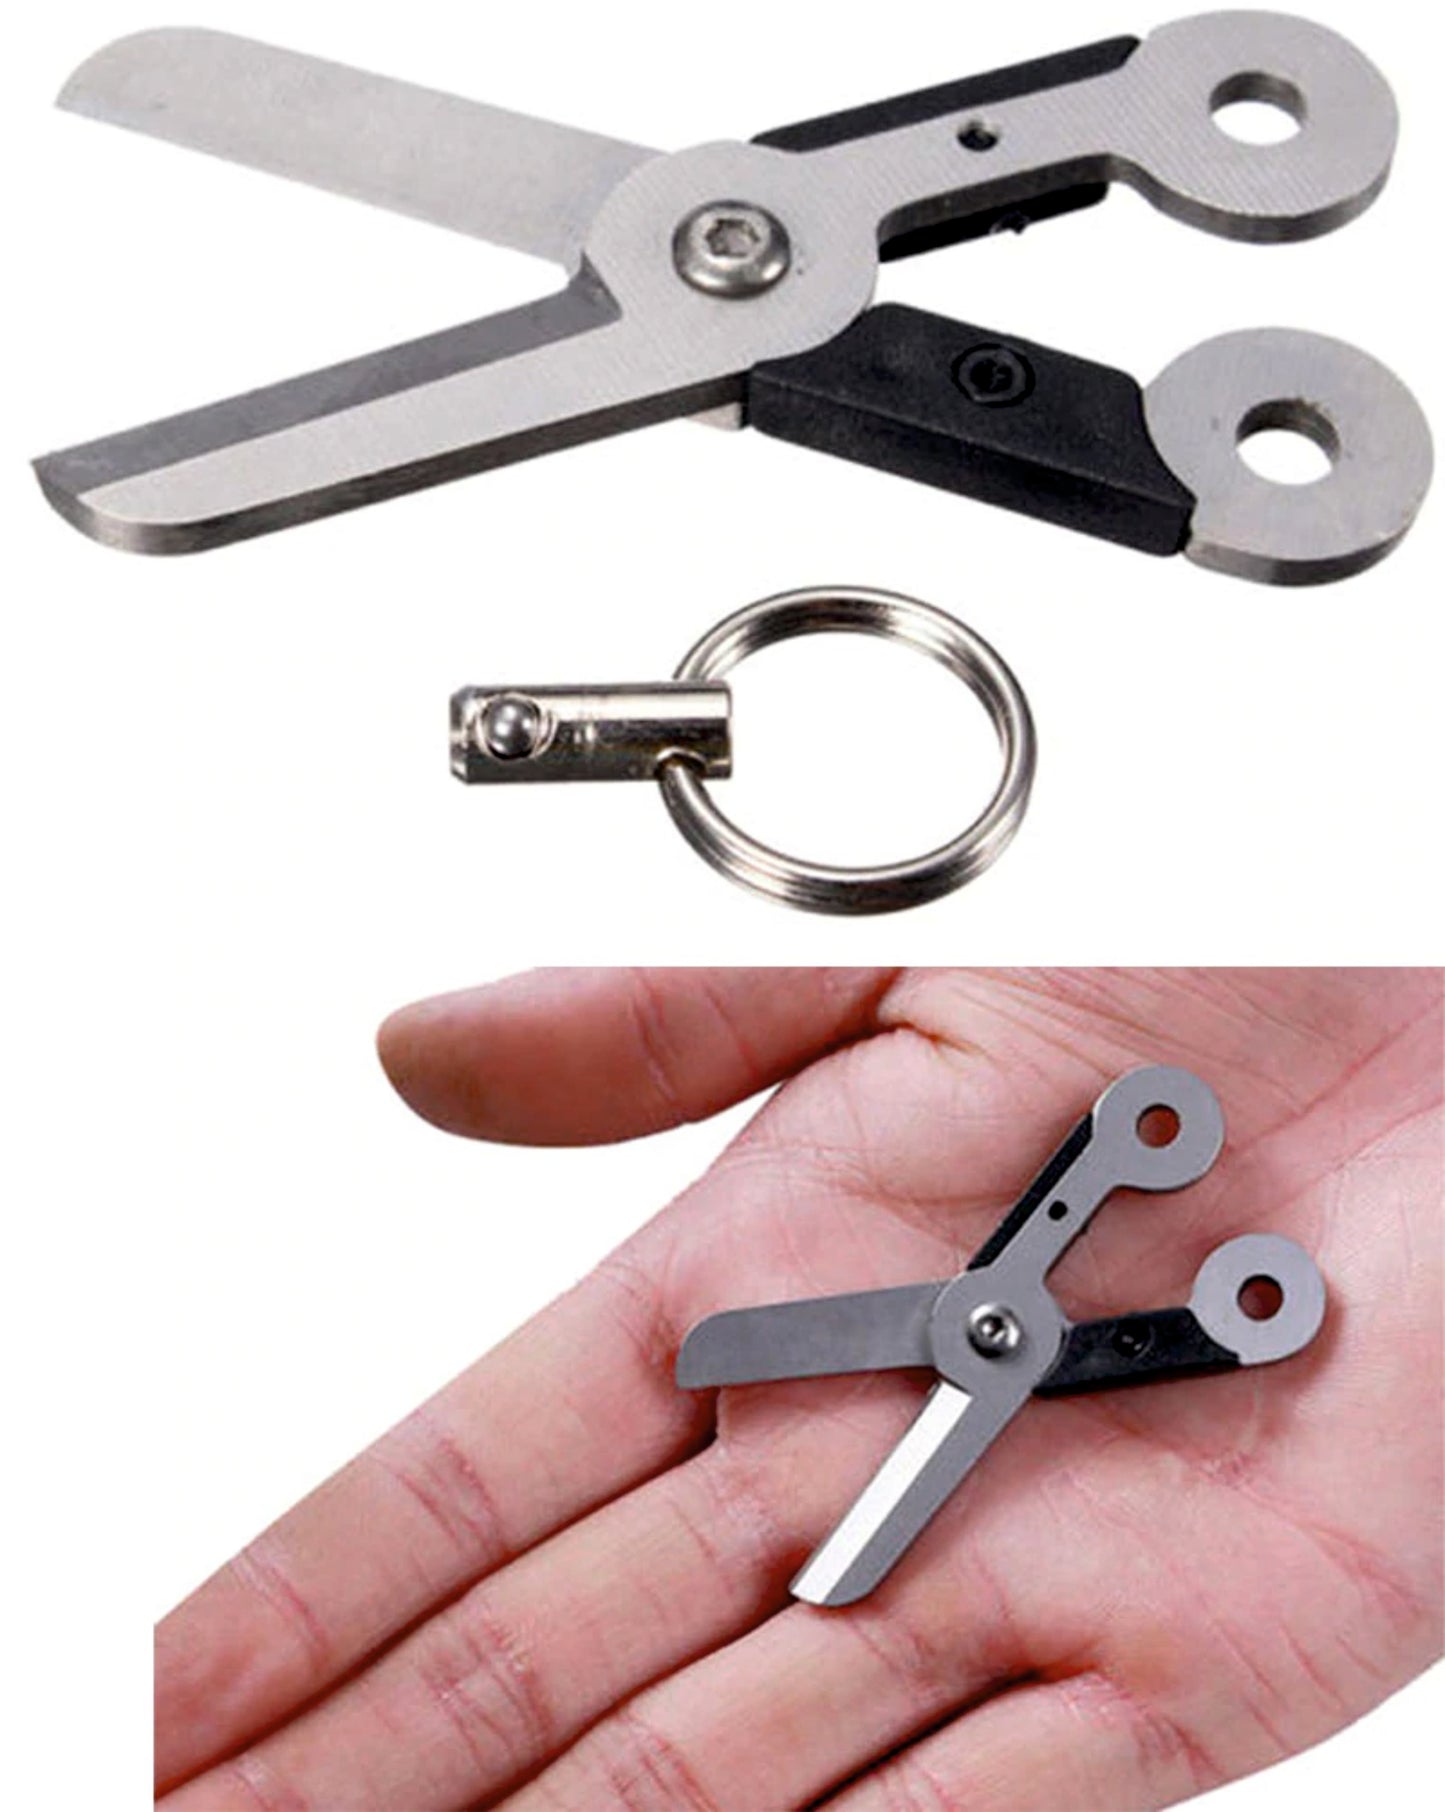 EDC Mini Small Scissors Key Ring Survival Emergency Camping Hiking Travel Tools